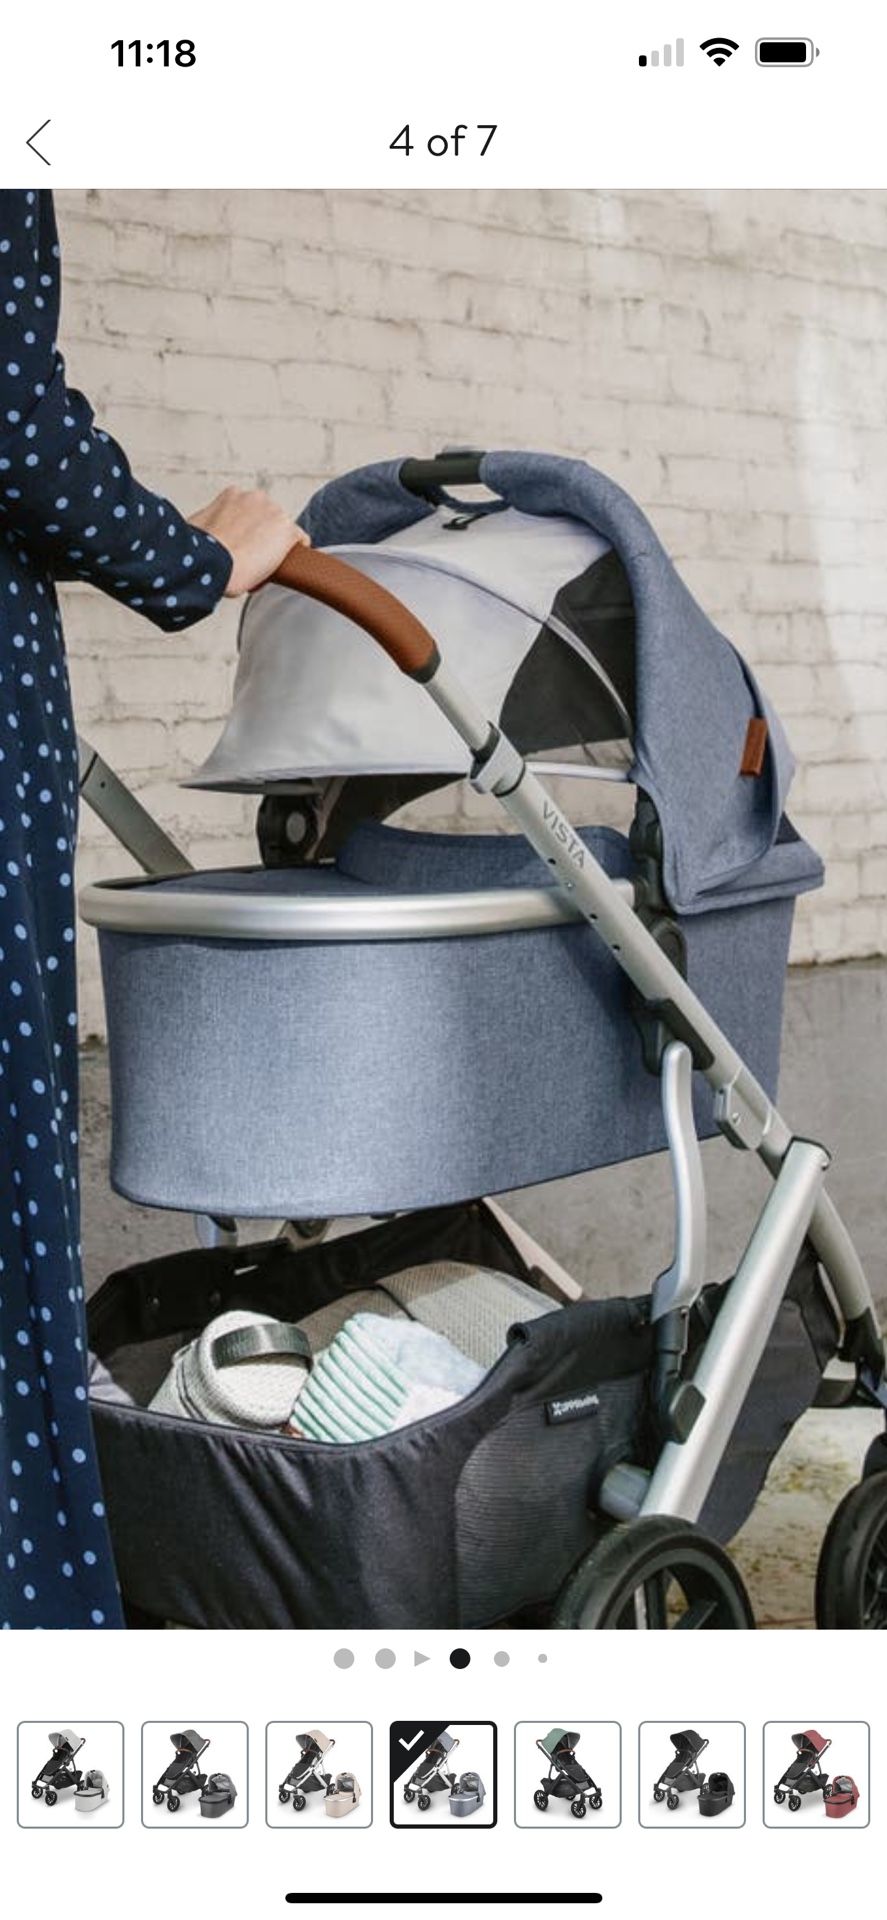 Uppa Baby Basinet Fits All Uppa Baby Stroller 